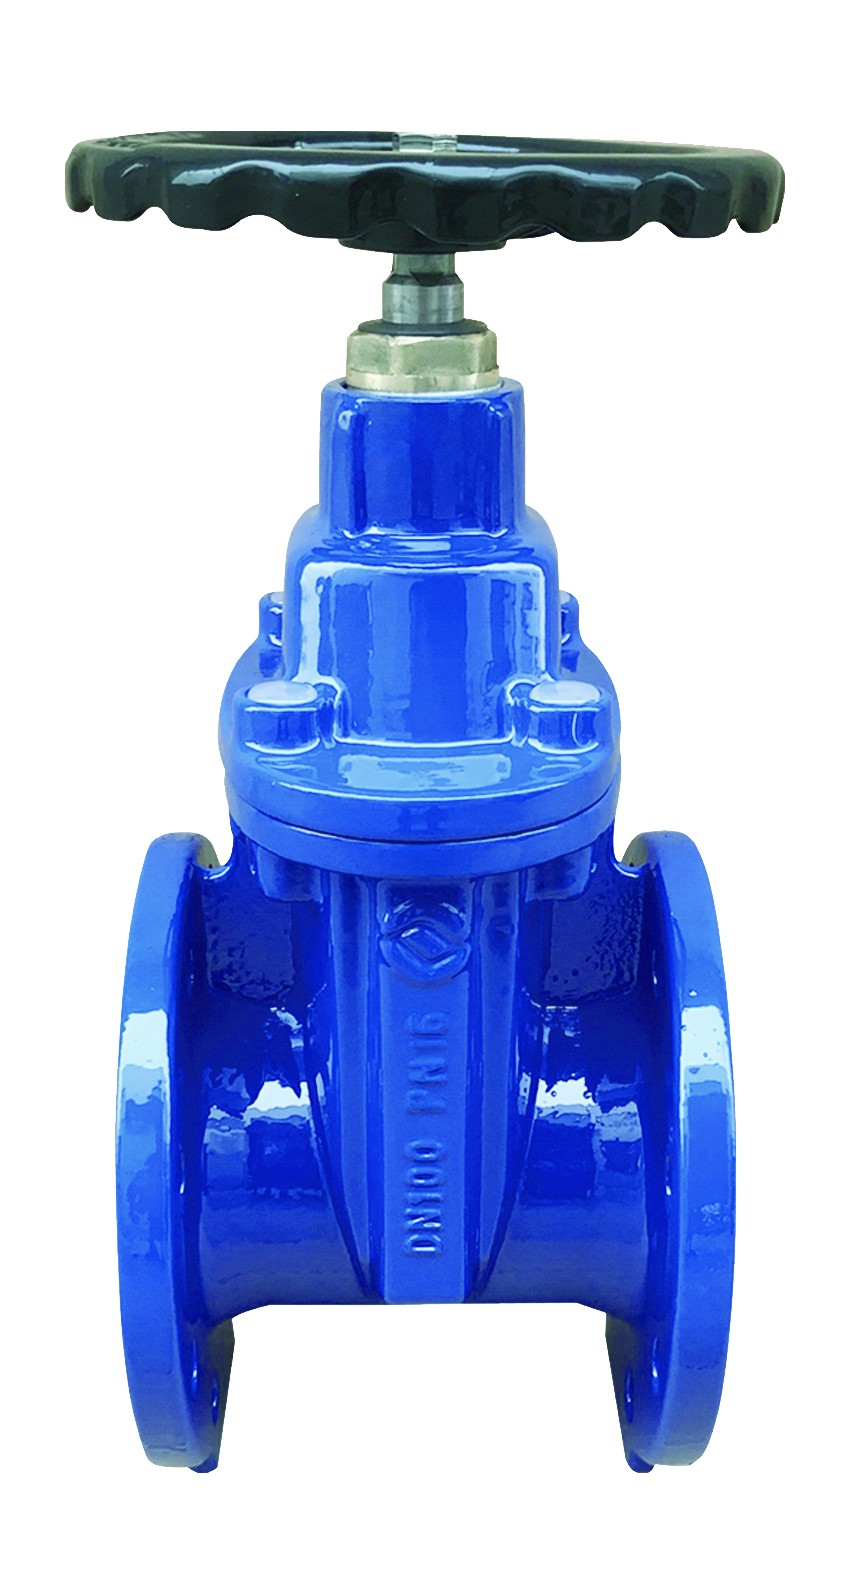 Rexroth SL30PA1-4X/        check valve